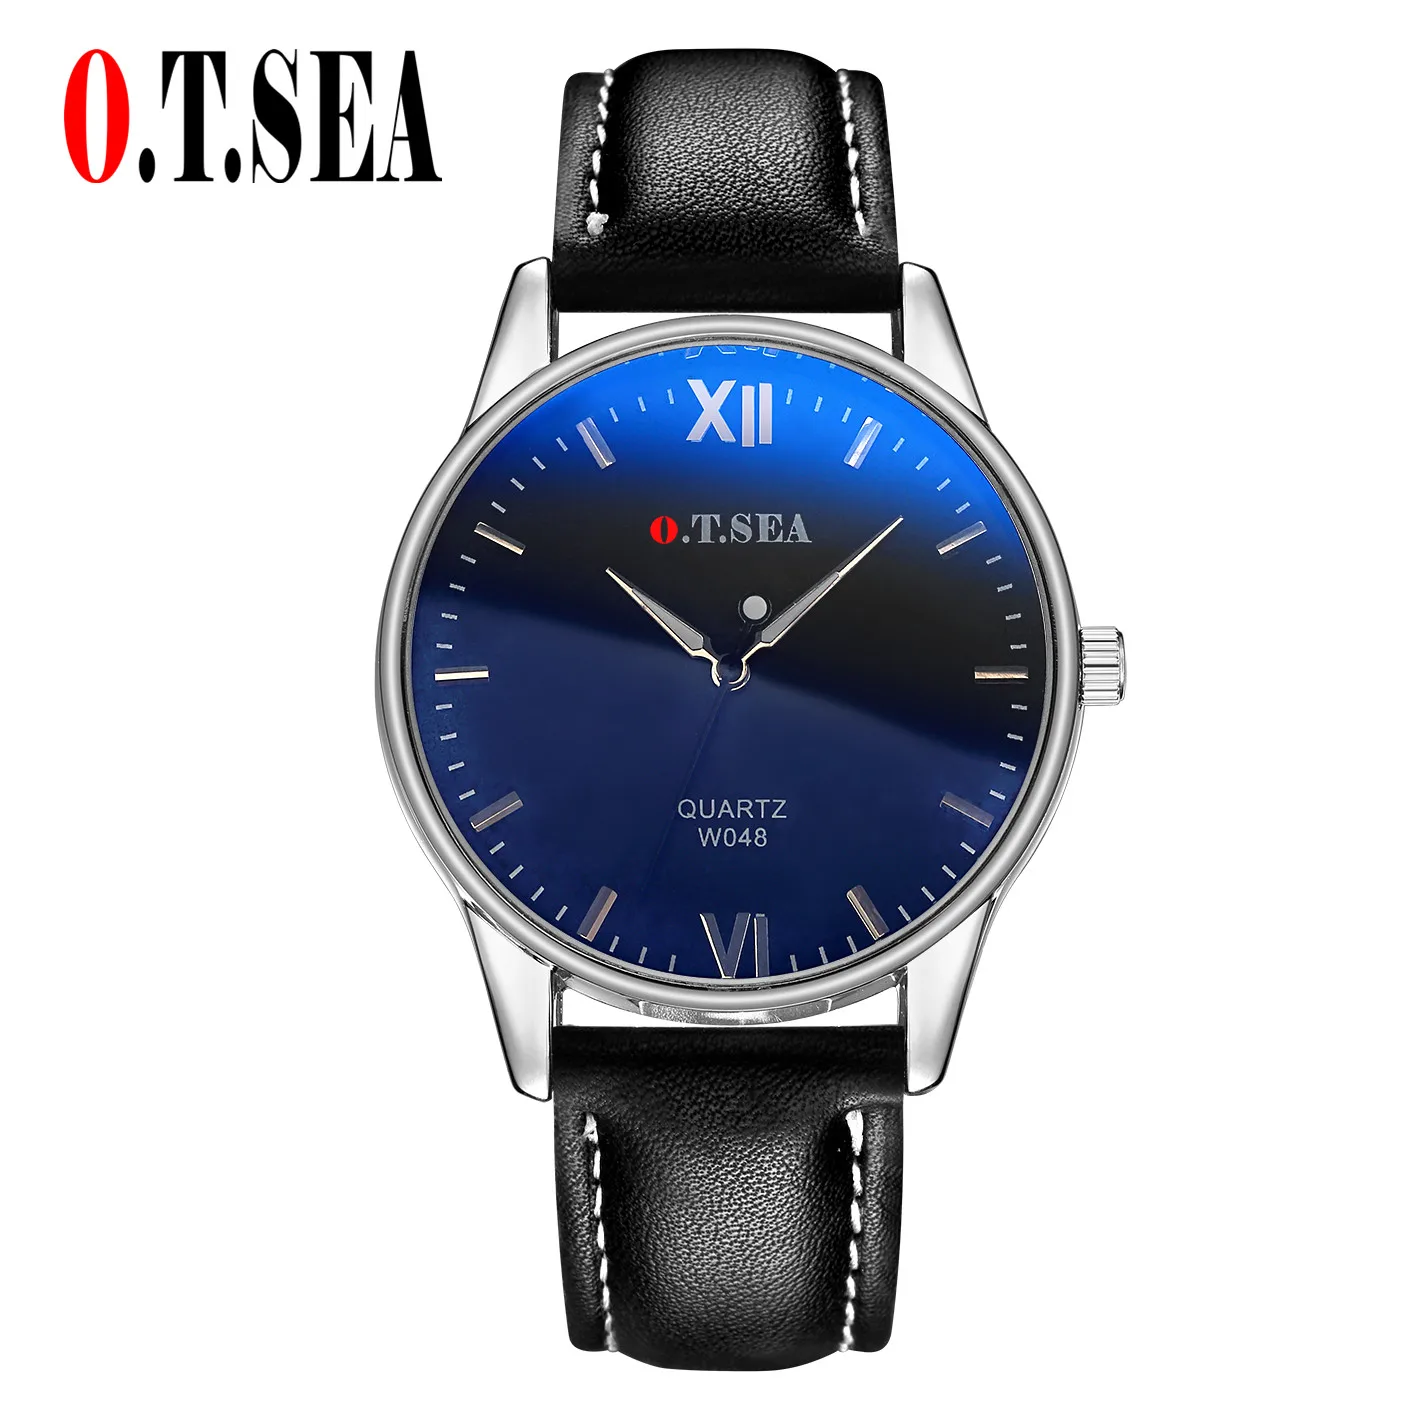 Luxury O.T.SEA Brand Blue Ray Glass Faux Leather Watches Men Military Sports Quartz Wrist Watch Relogio Masculino W048 | Наручные часы